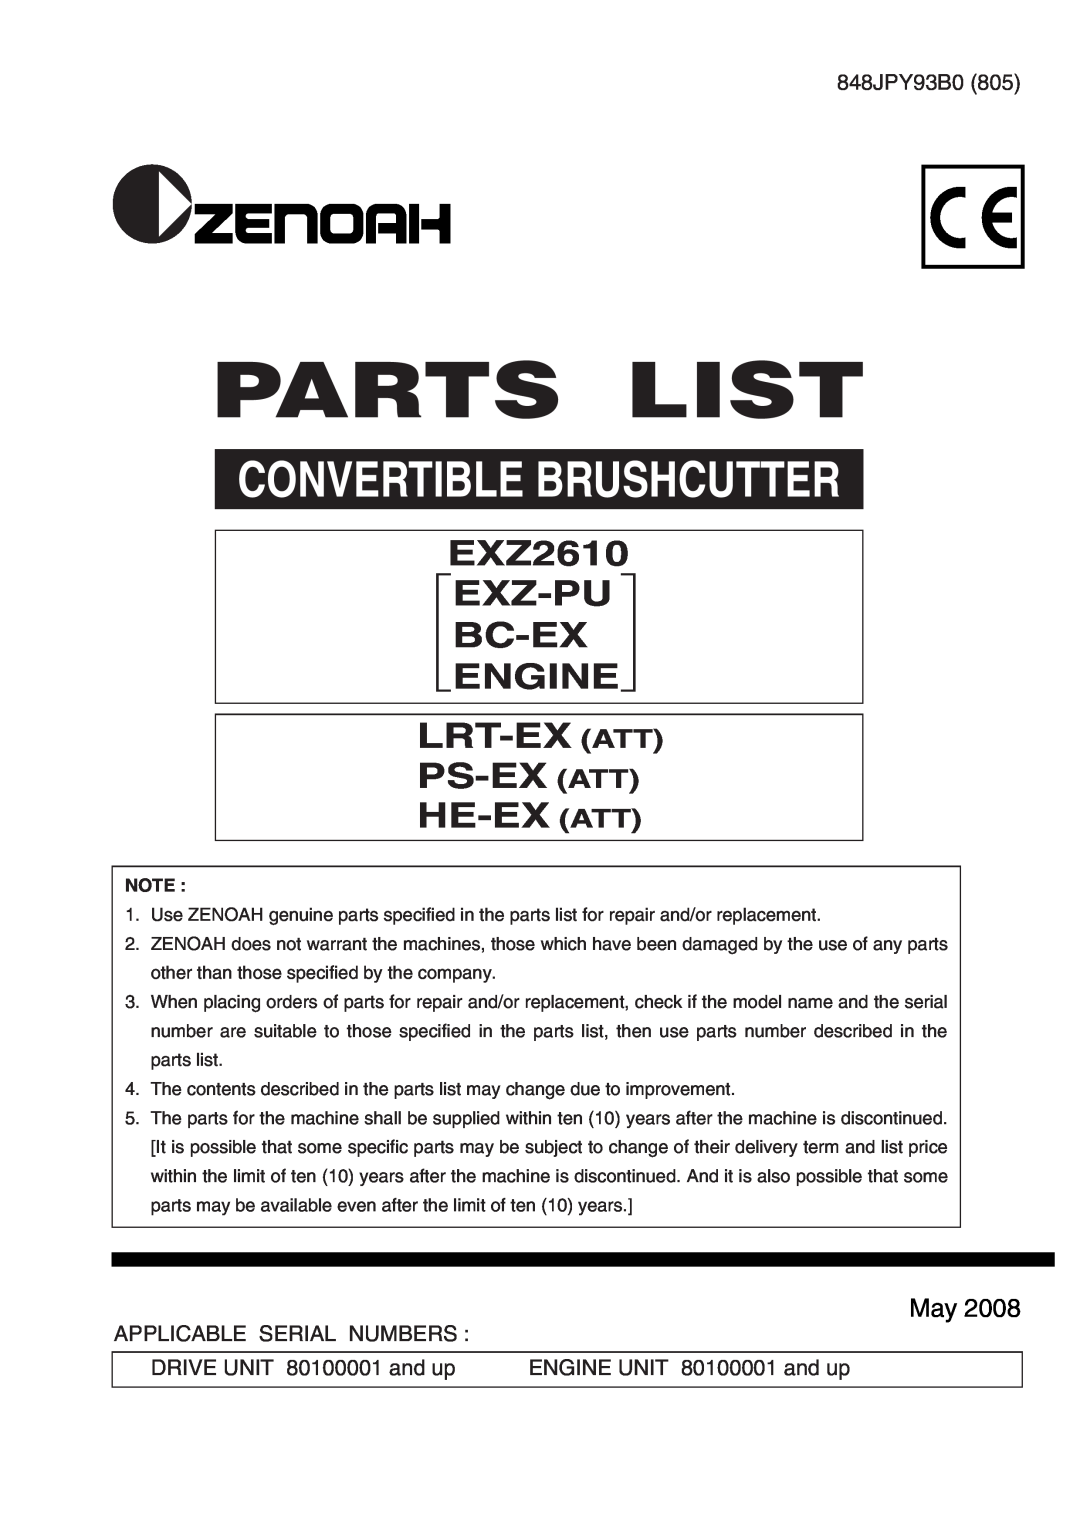 Zenoah EX-BC, ENGINE manual Parts List, Convertible Brushcutter, EXZ2610 EXZ-PU ,  Bc-Ex   Engine, 848JPY93B0 